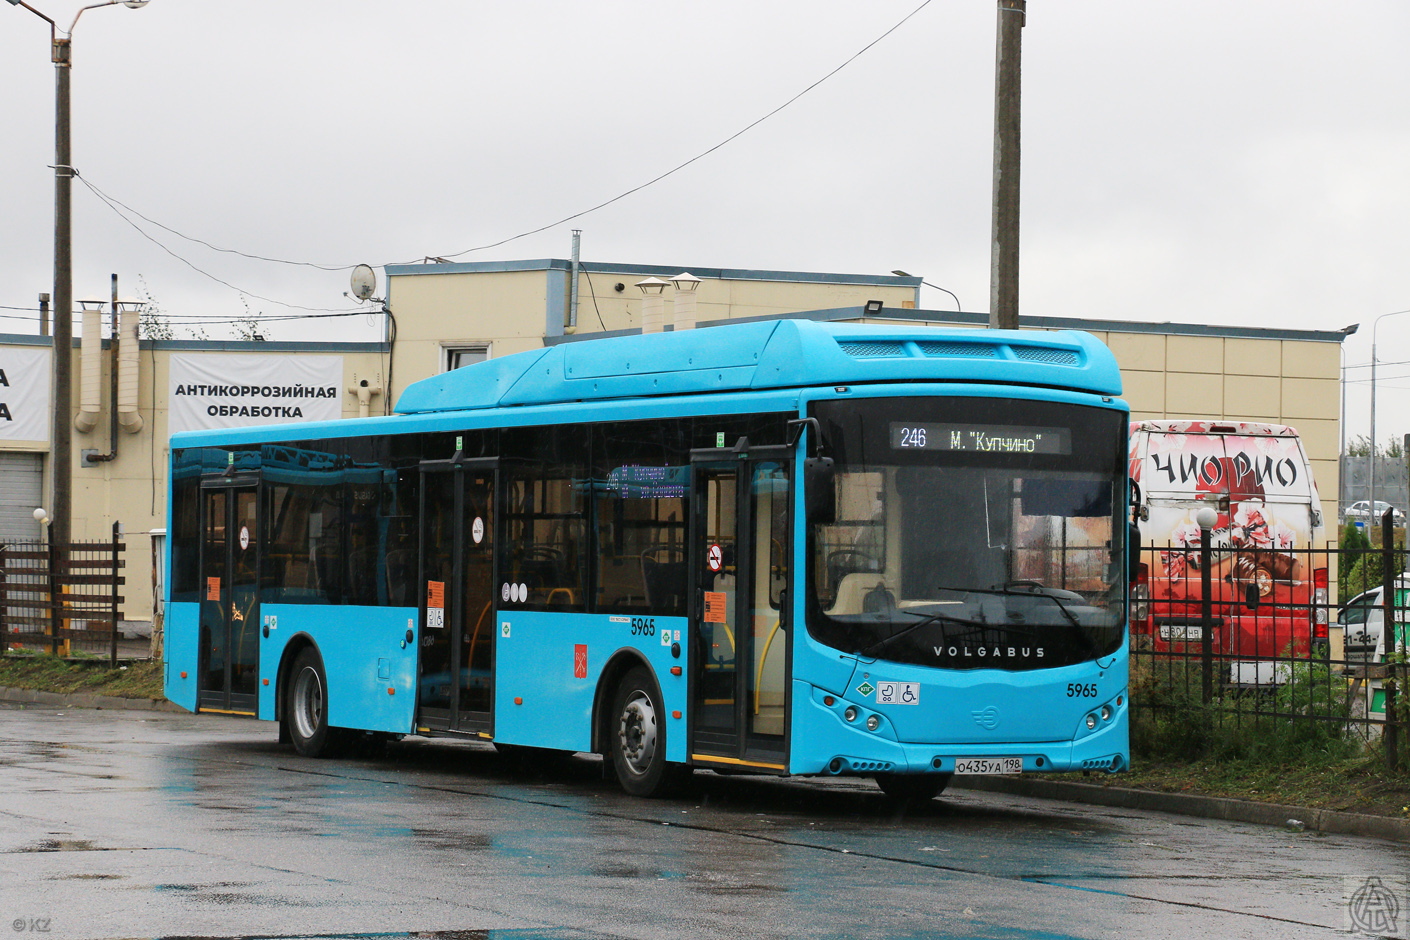 Sanktpēterburga, Volgabus-5270.G2 (CNG) № 5965